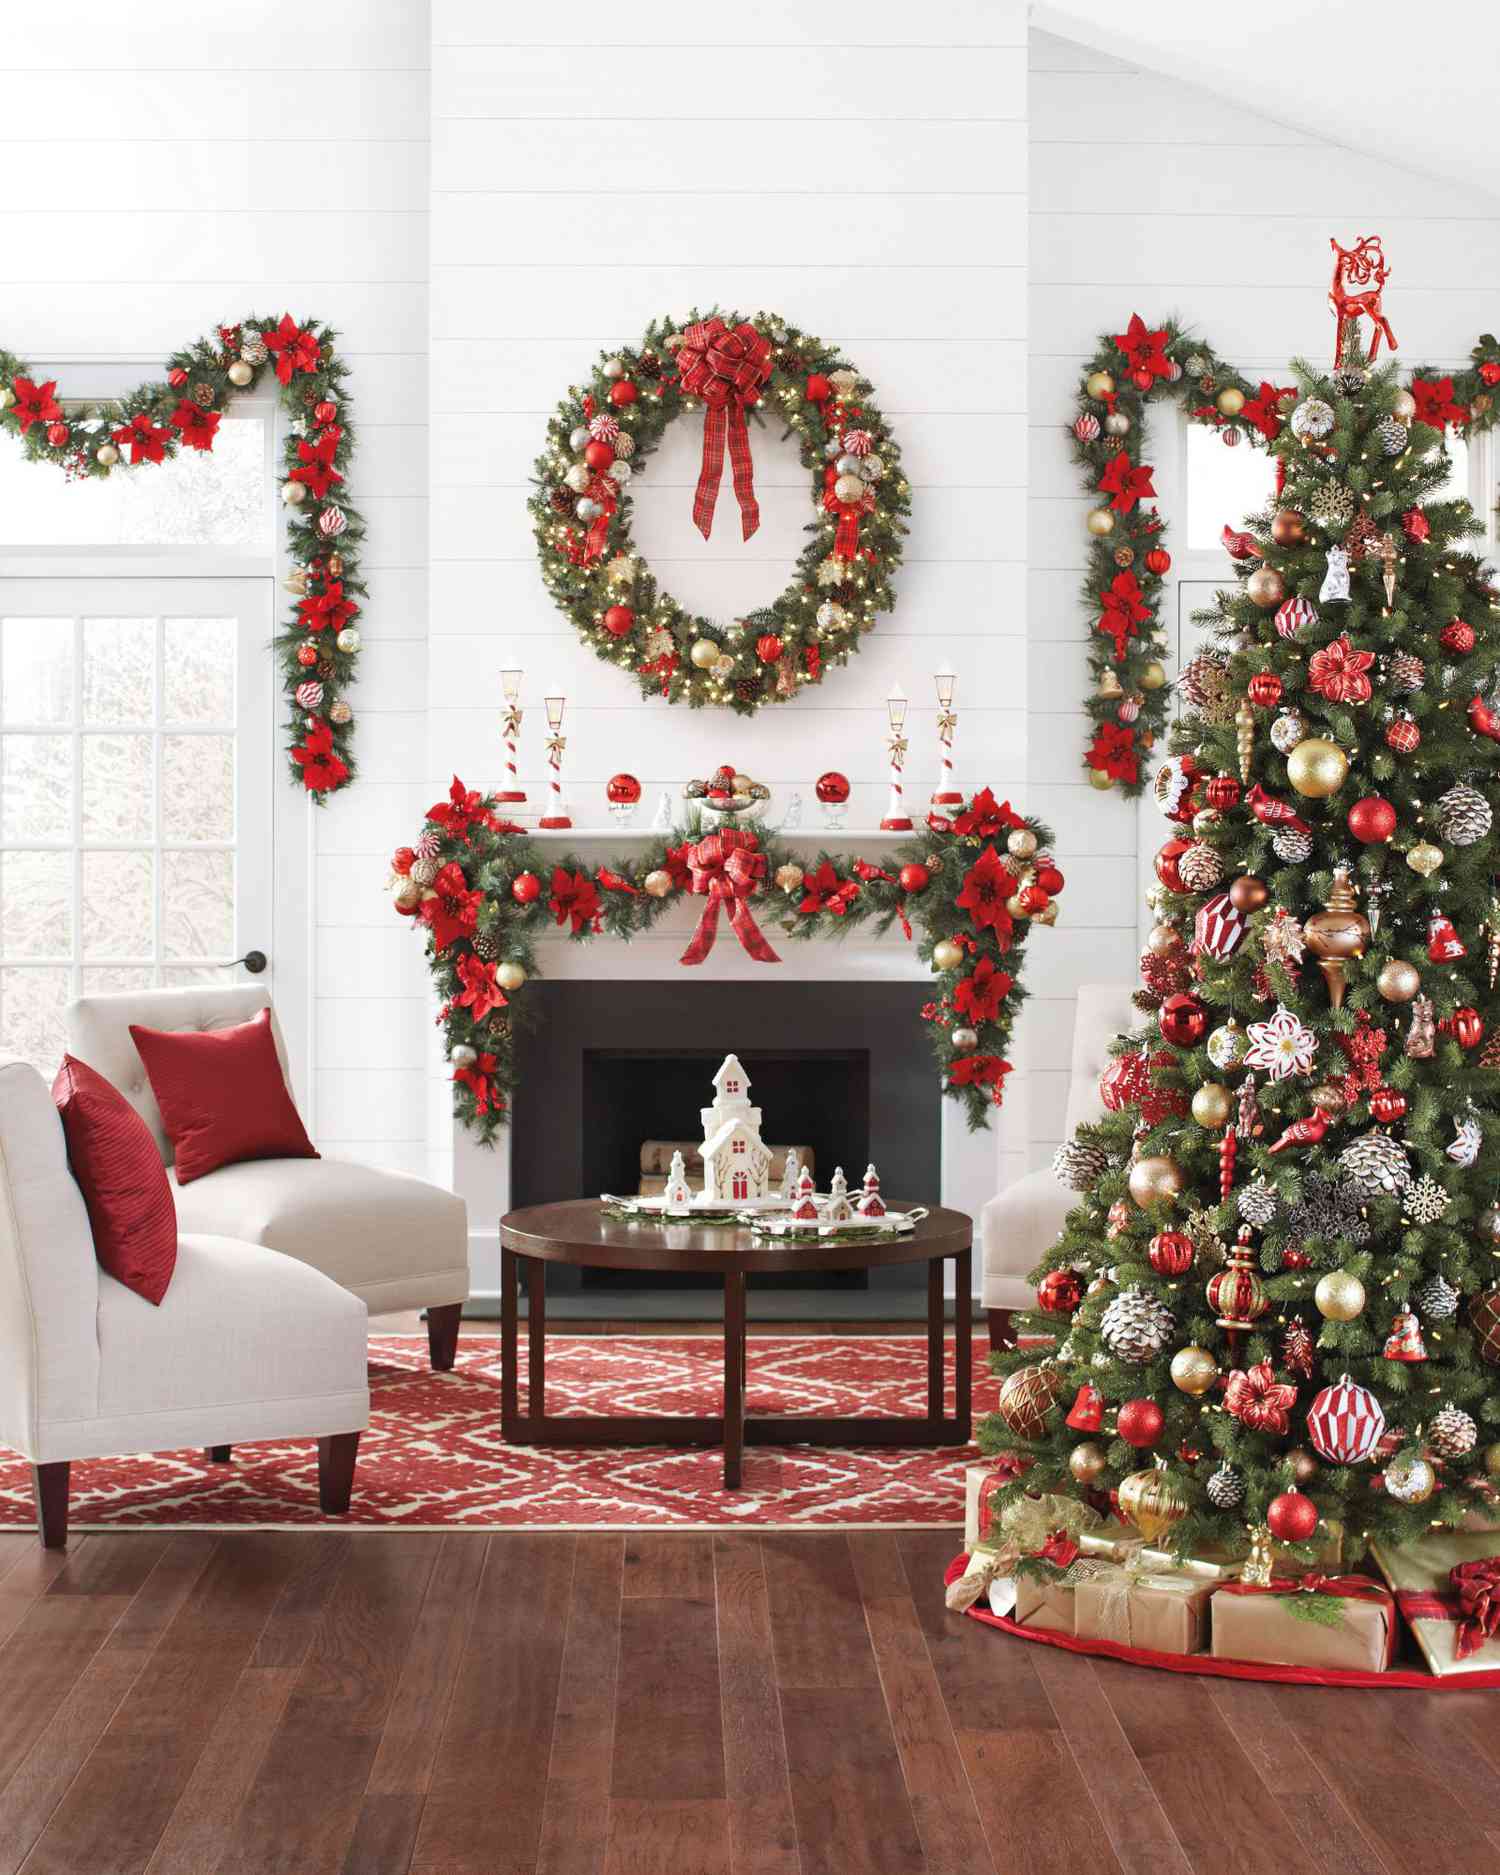 Details about   Christmas xmas ornaments decorations 